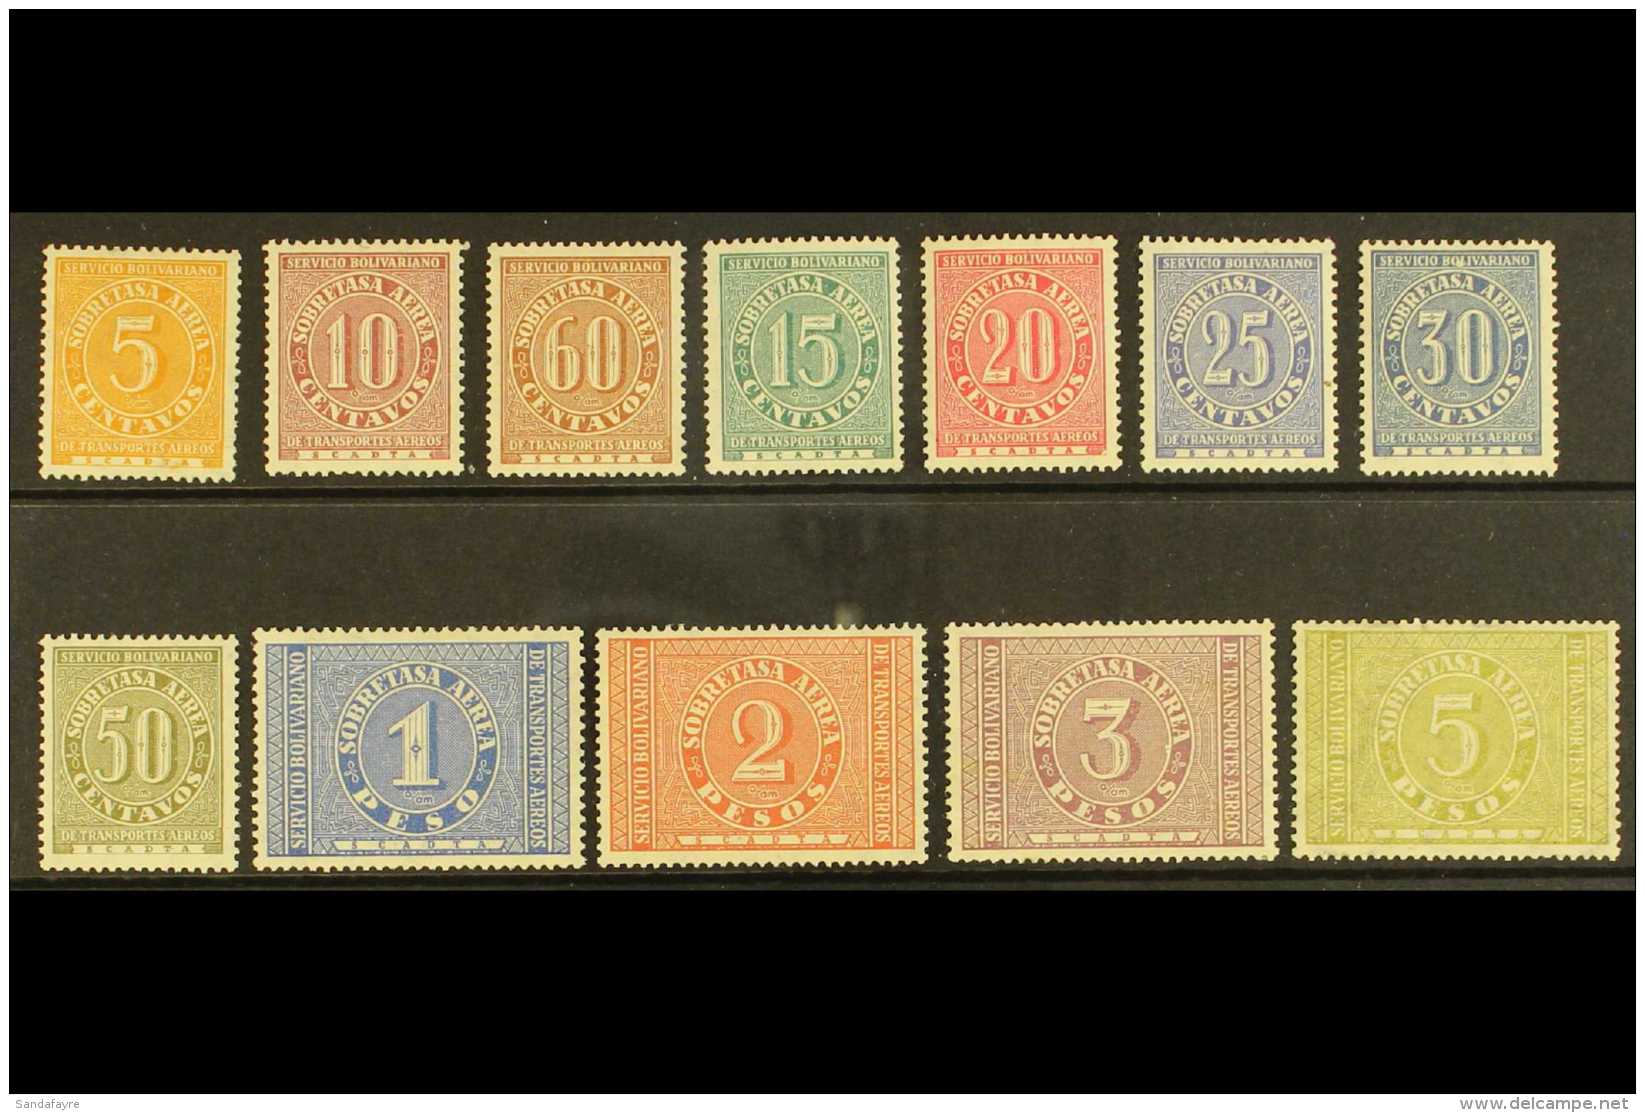 SCADTA 1929 Numerals - For International Airmail Complete Set (Scott C68/79, SG 71/82, Michel 1/12), Fine Mint,... - Kolumbien